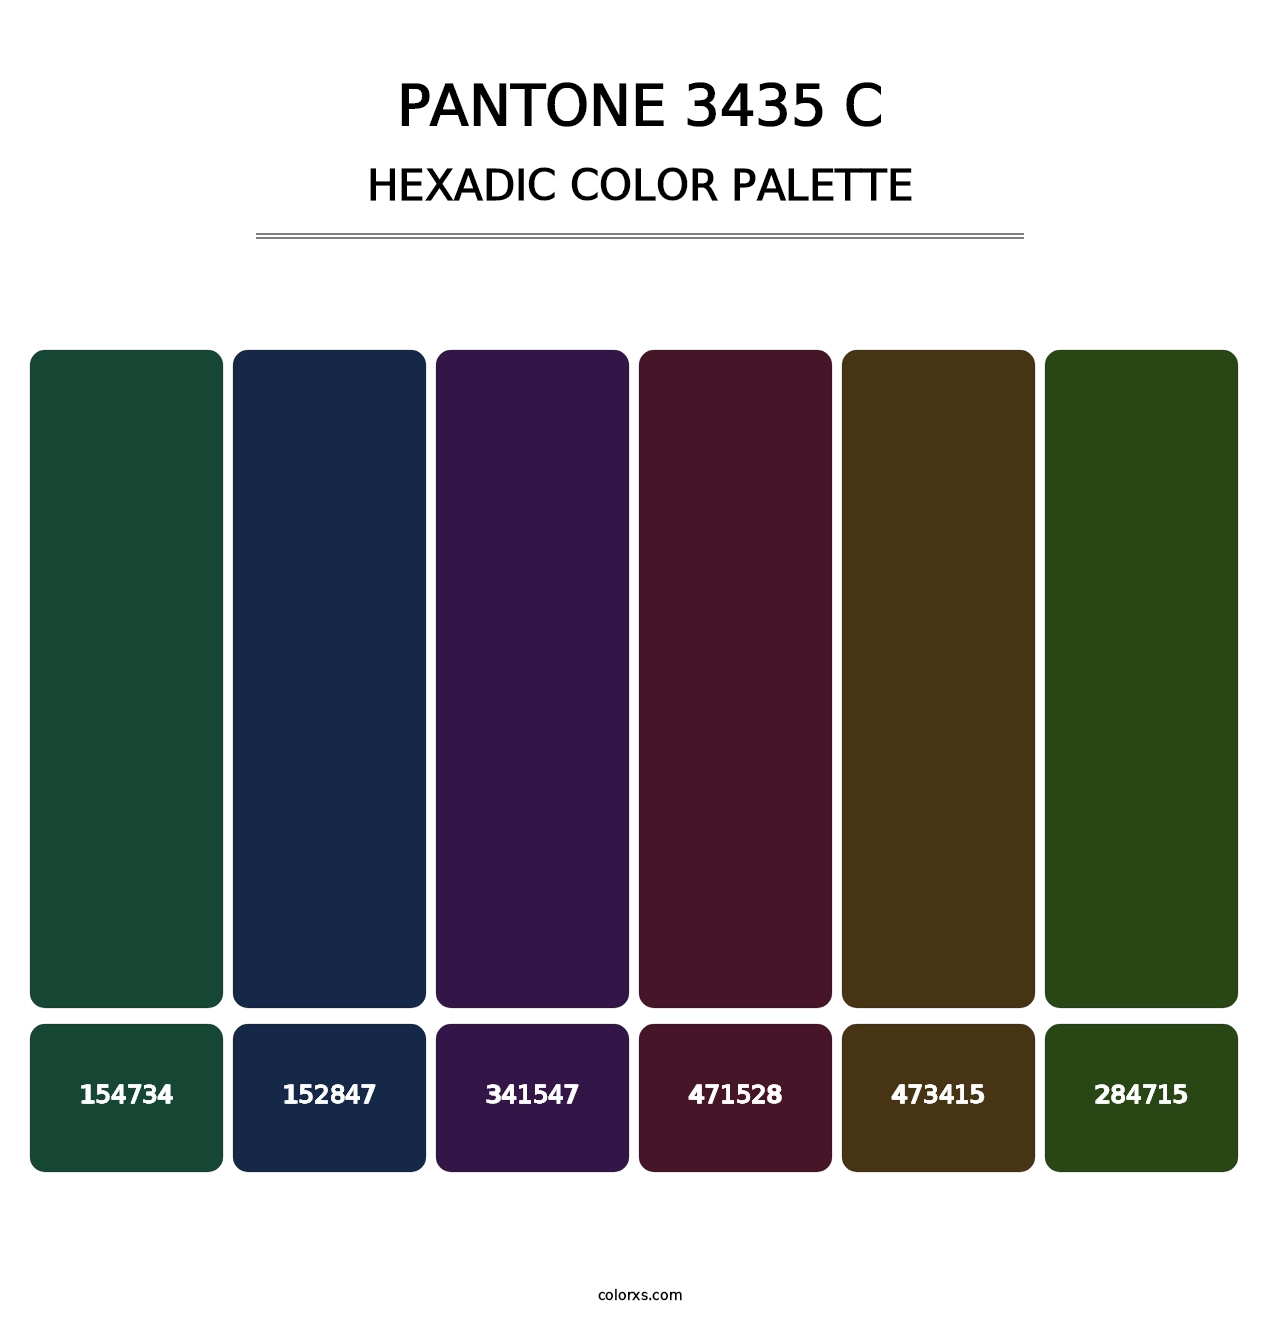 PANTONE 3435 C - Hexadic Color Palette